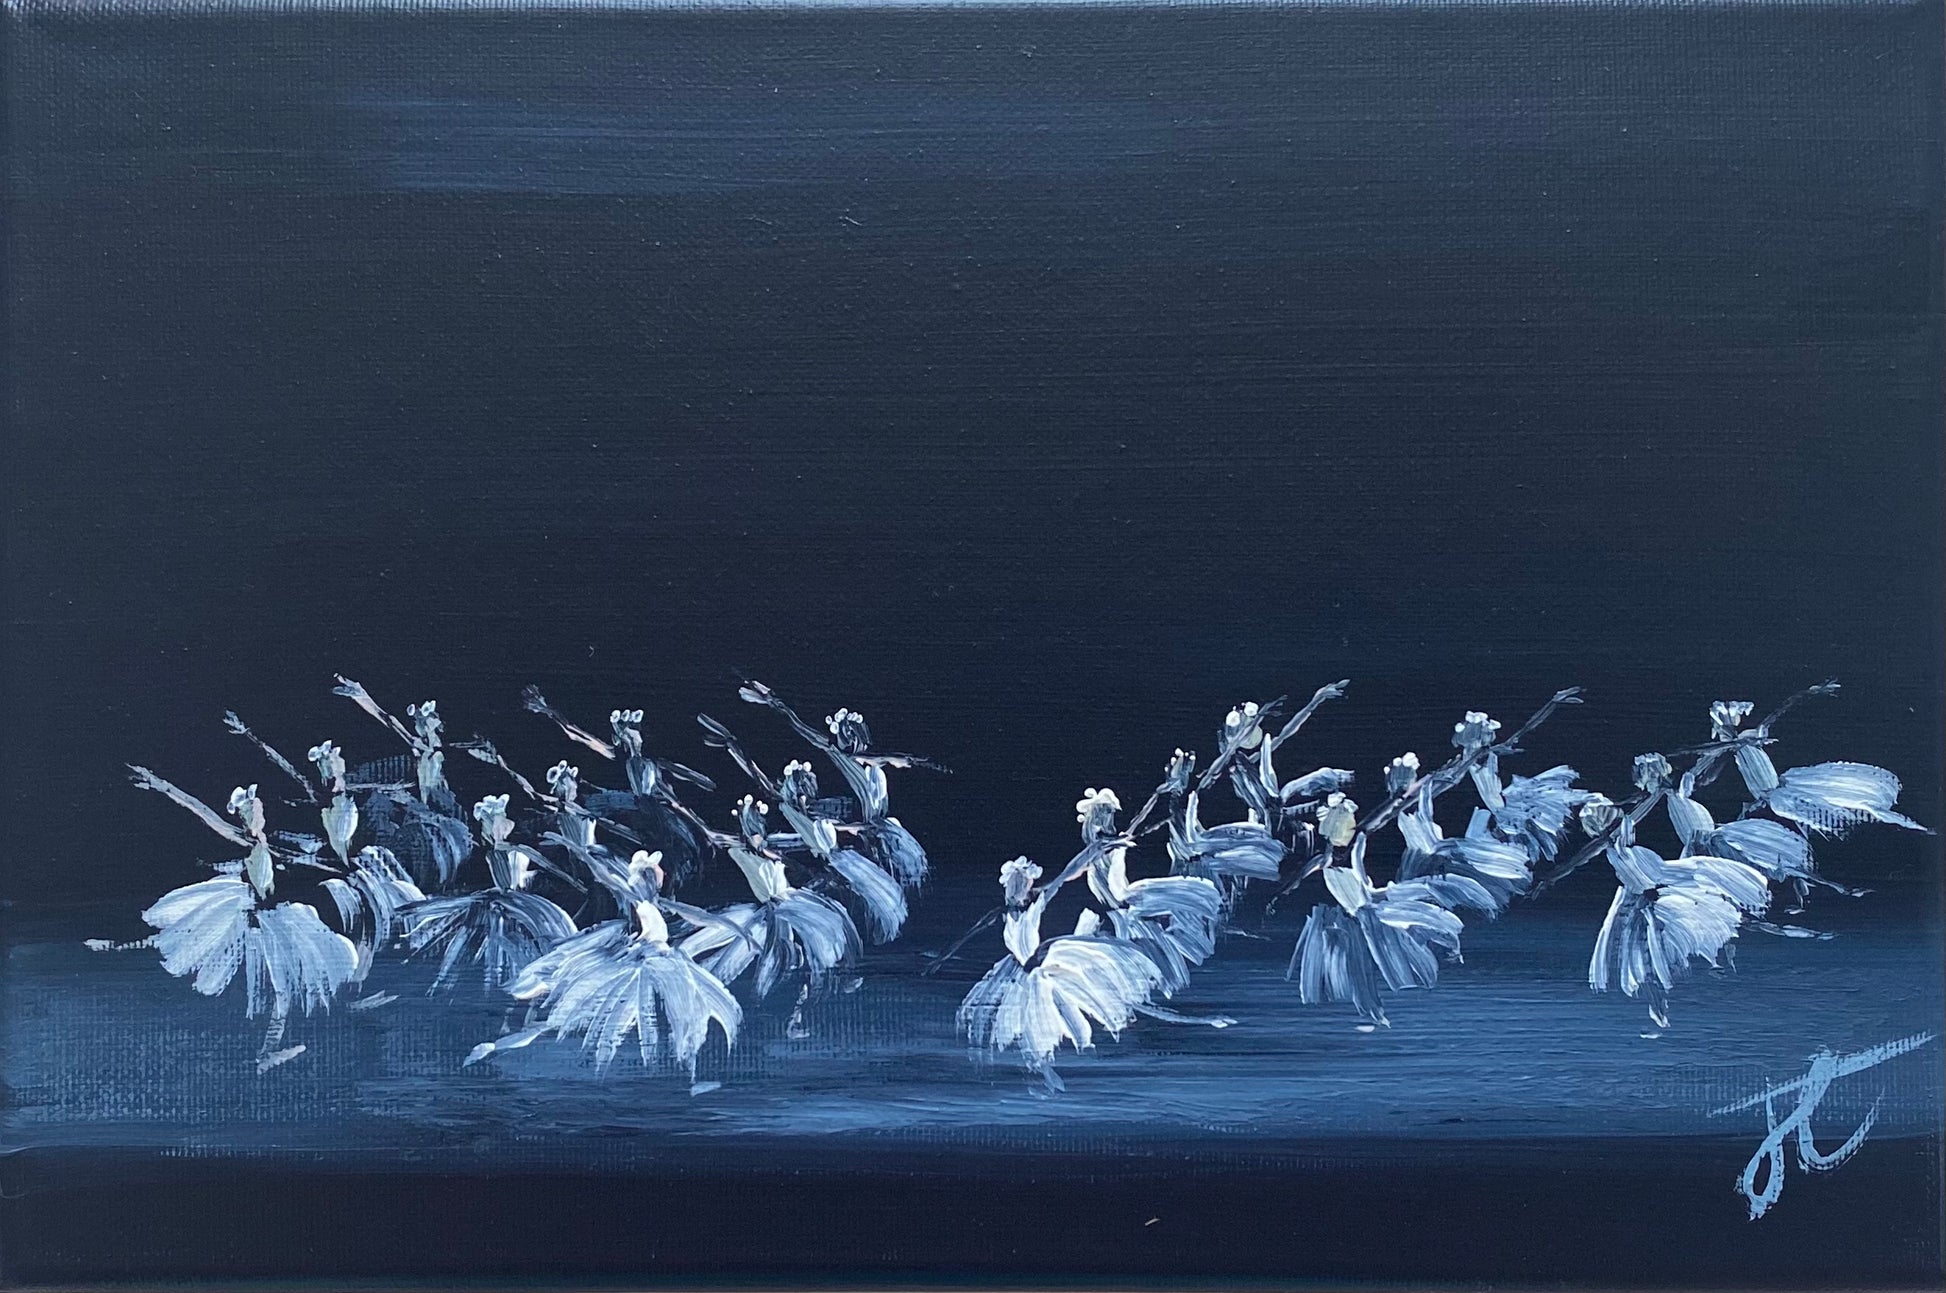 Painting of corps de ballet scene from Giselle act 2: twenty ballerinas in long white romantic tutus against a dark blue background.